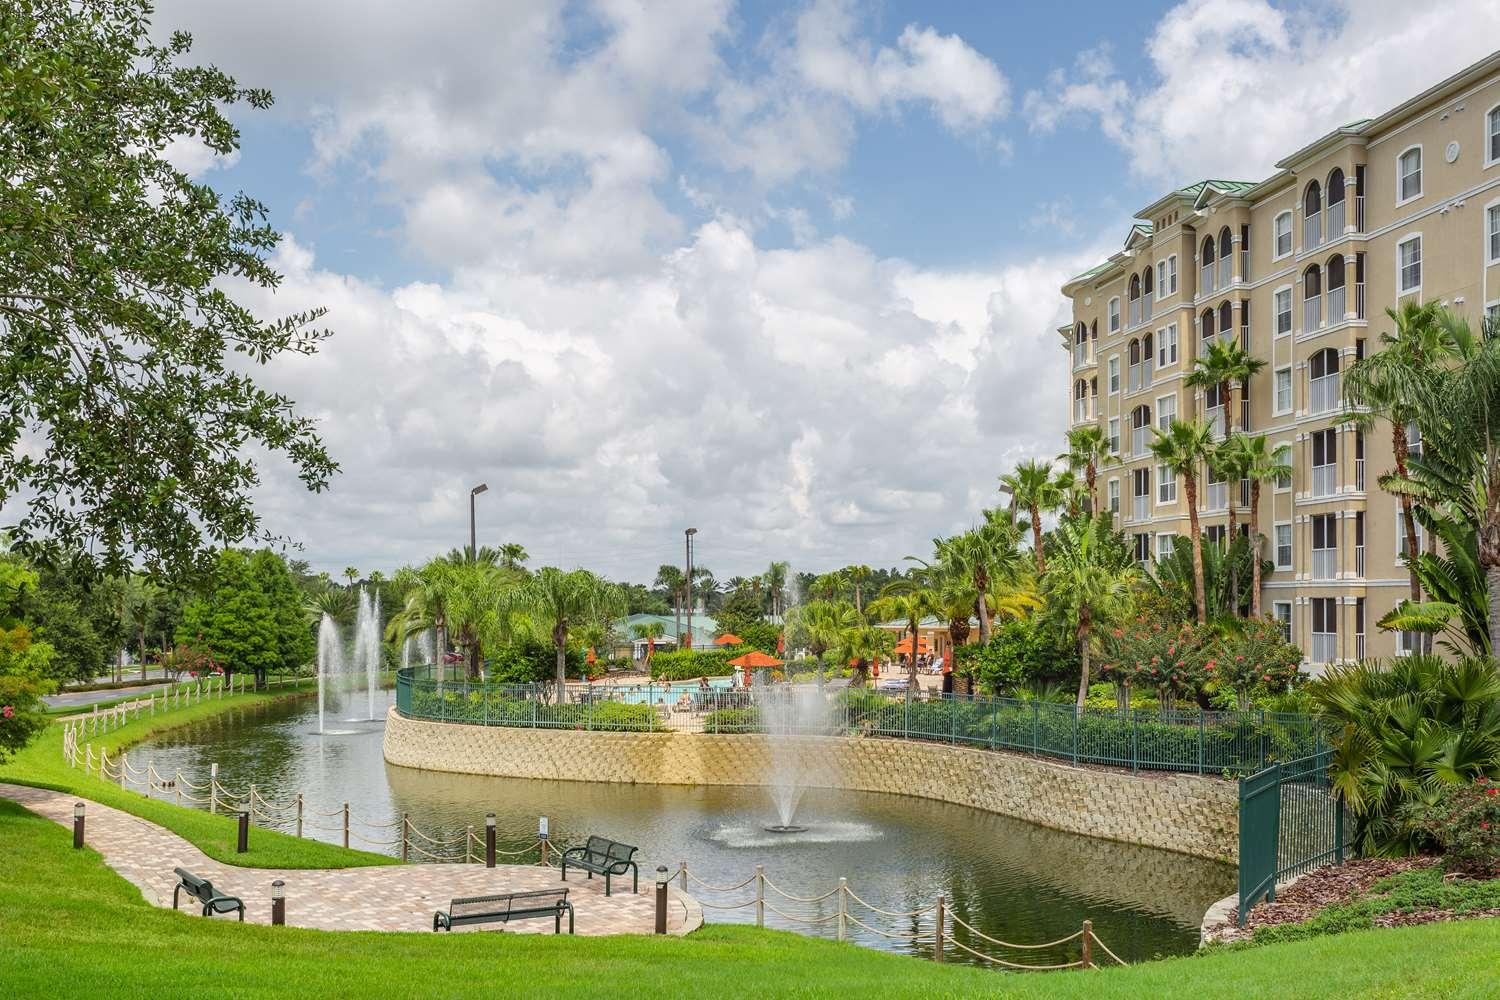 Hilton Vacation Club Mystic Dunes Orlando in Celebration, FL